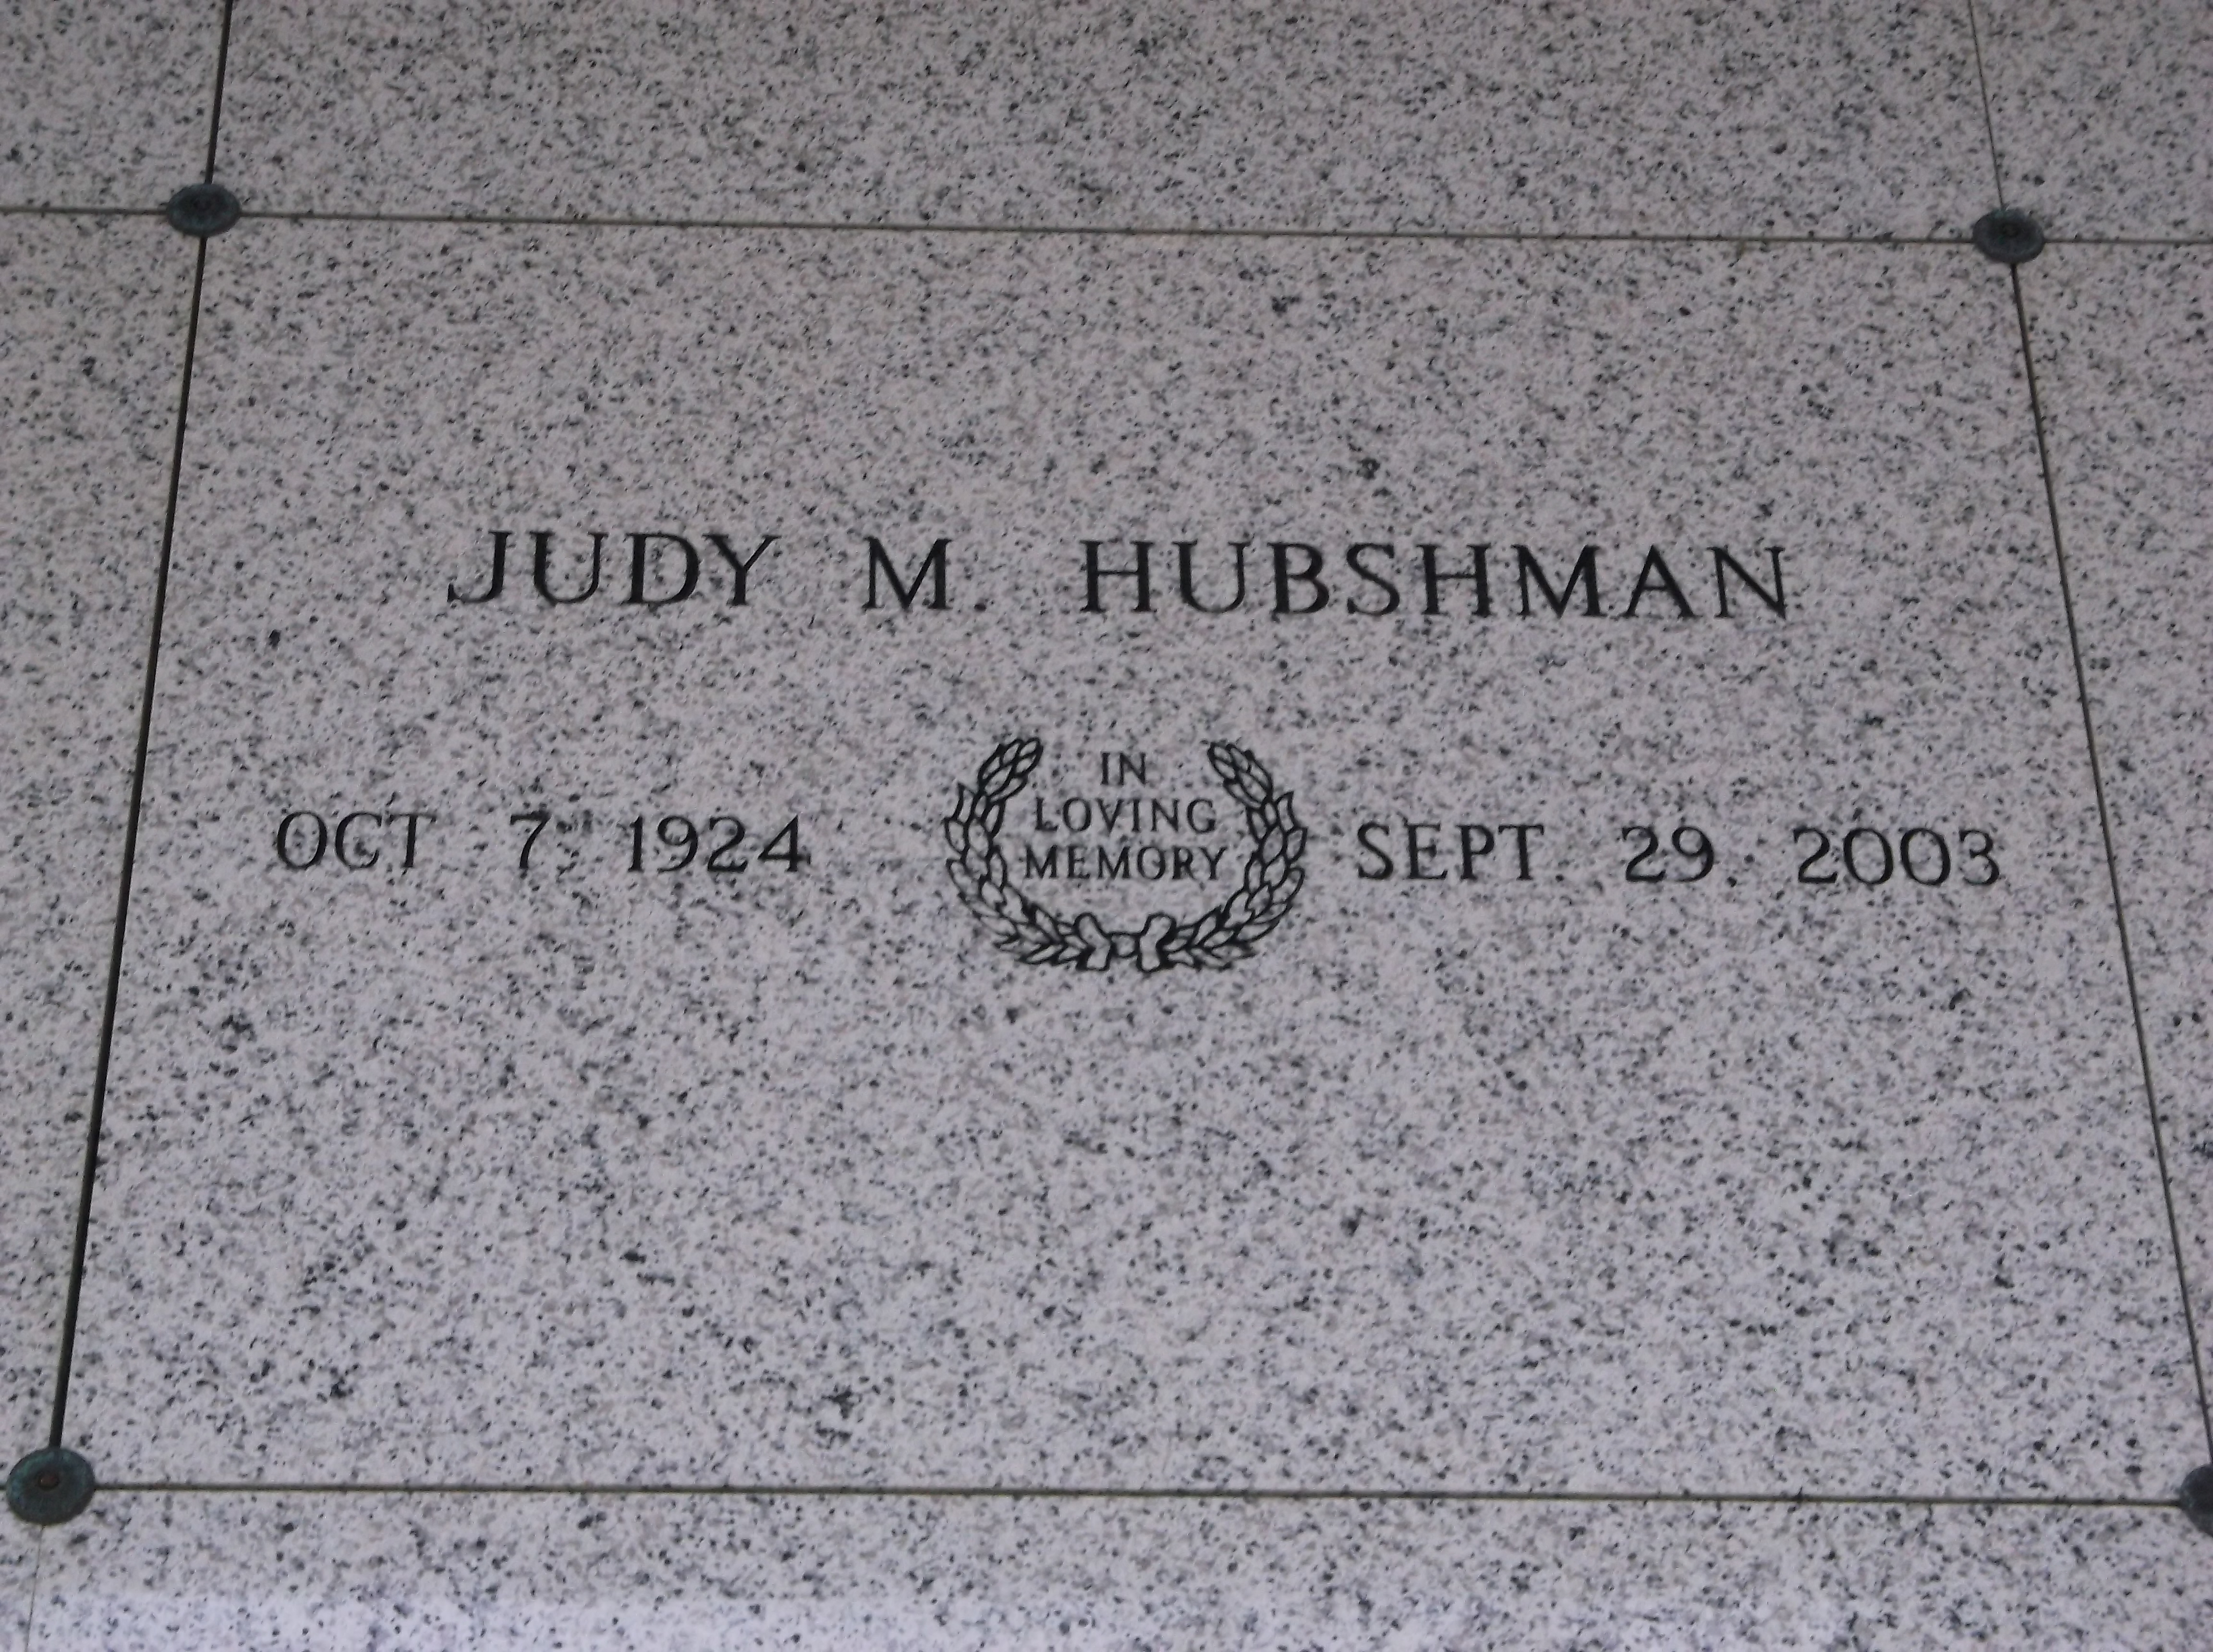 Judy M Hubshman